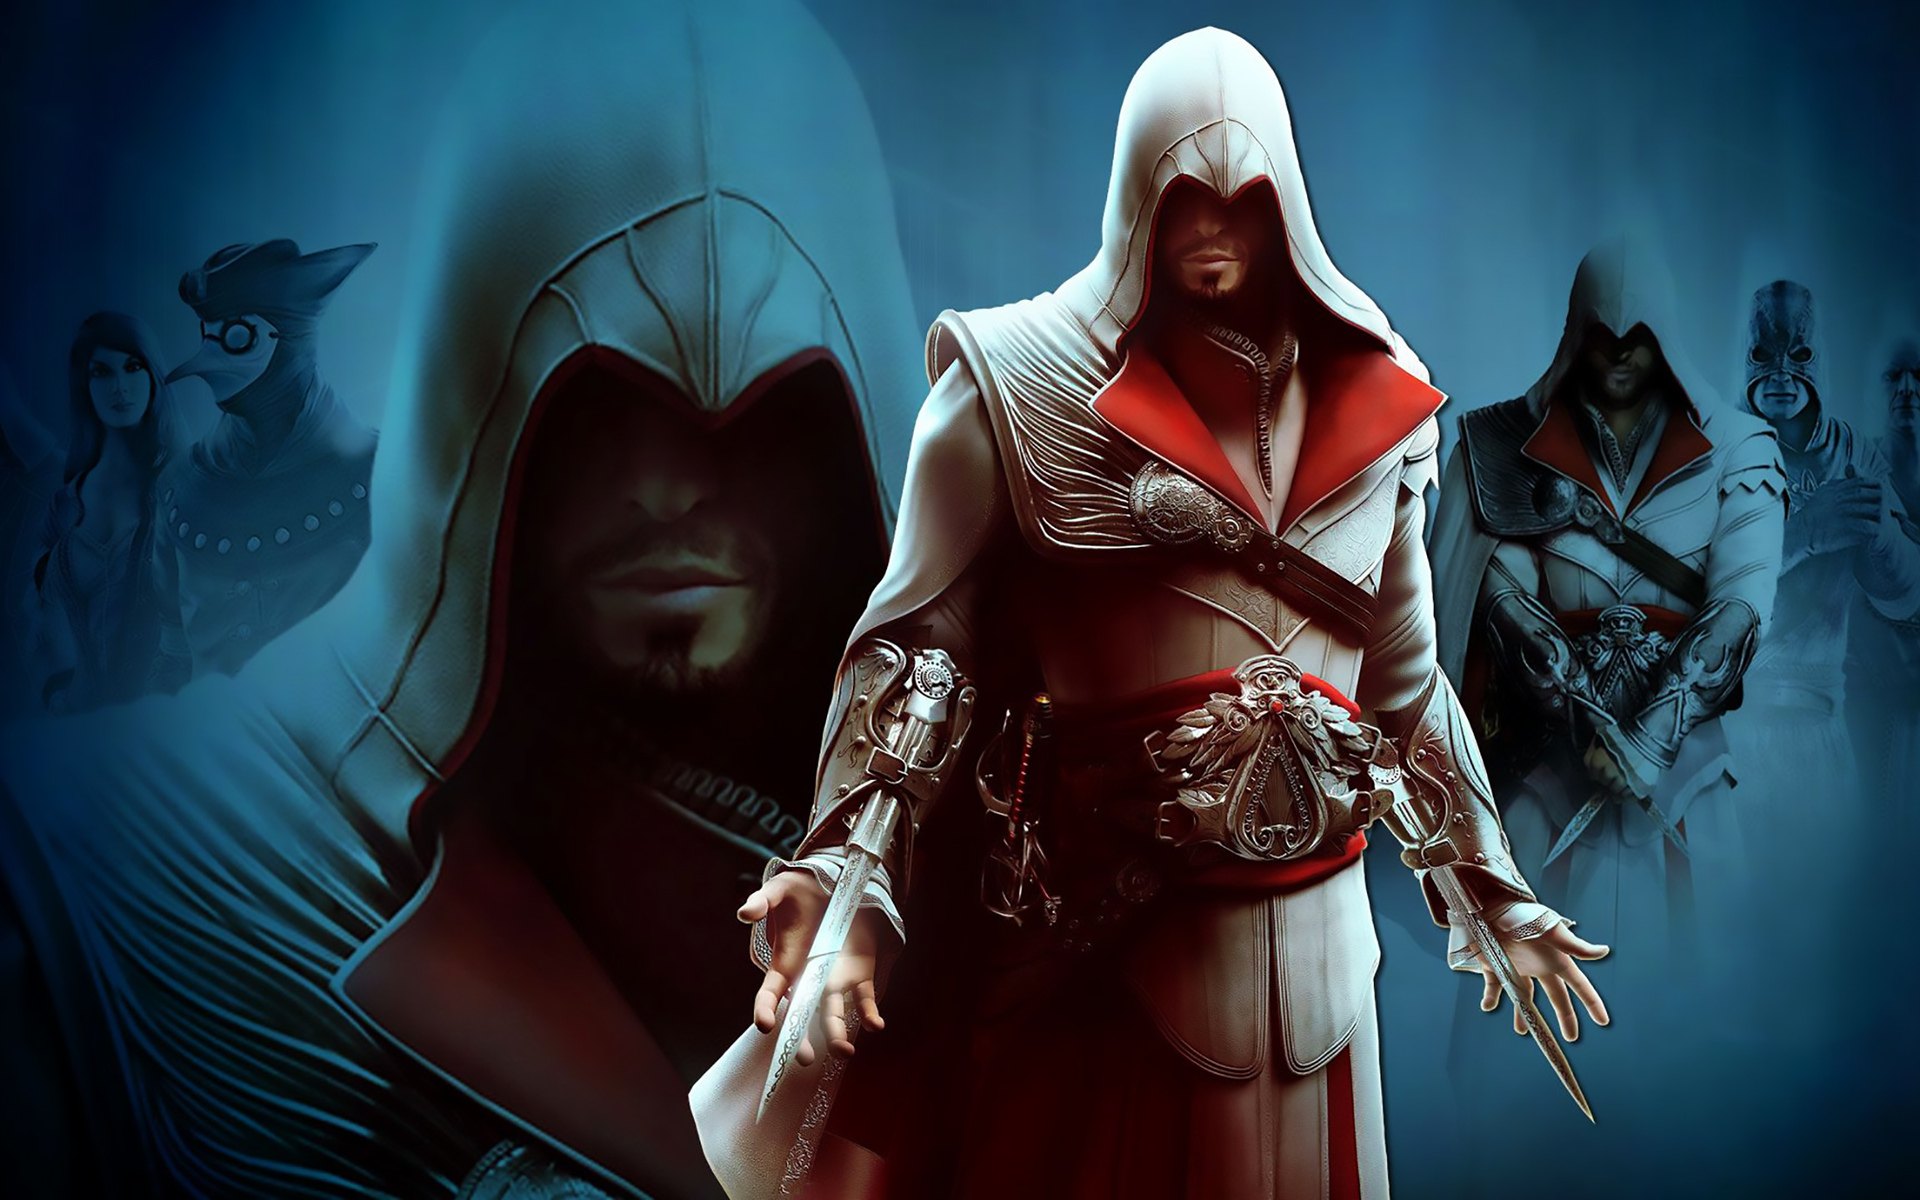 Assassin s телефон. Ассасин Крид. Эцио братство крови. Assassin's Creed: Brotherhood. Ассасин Крид бразерхуд.